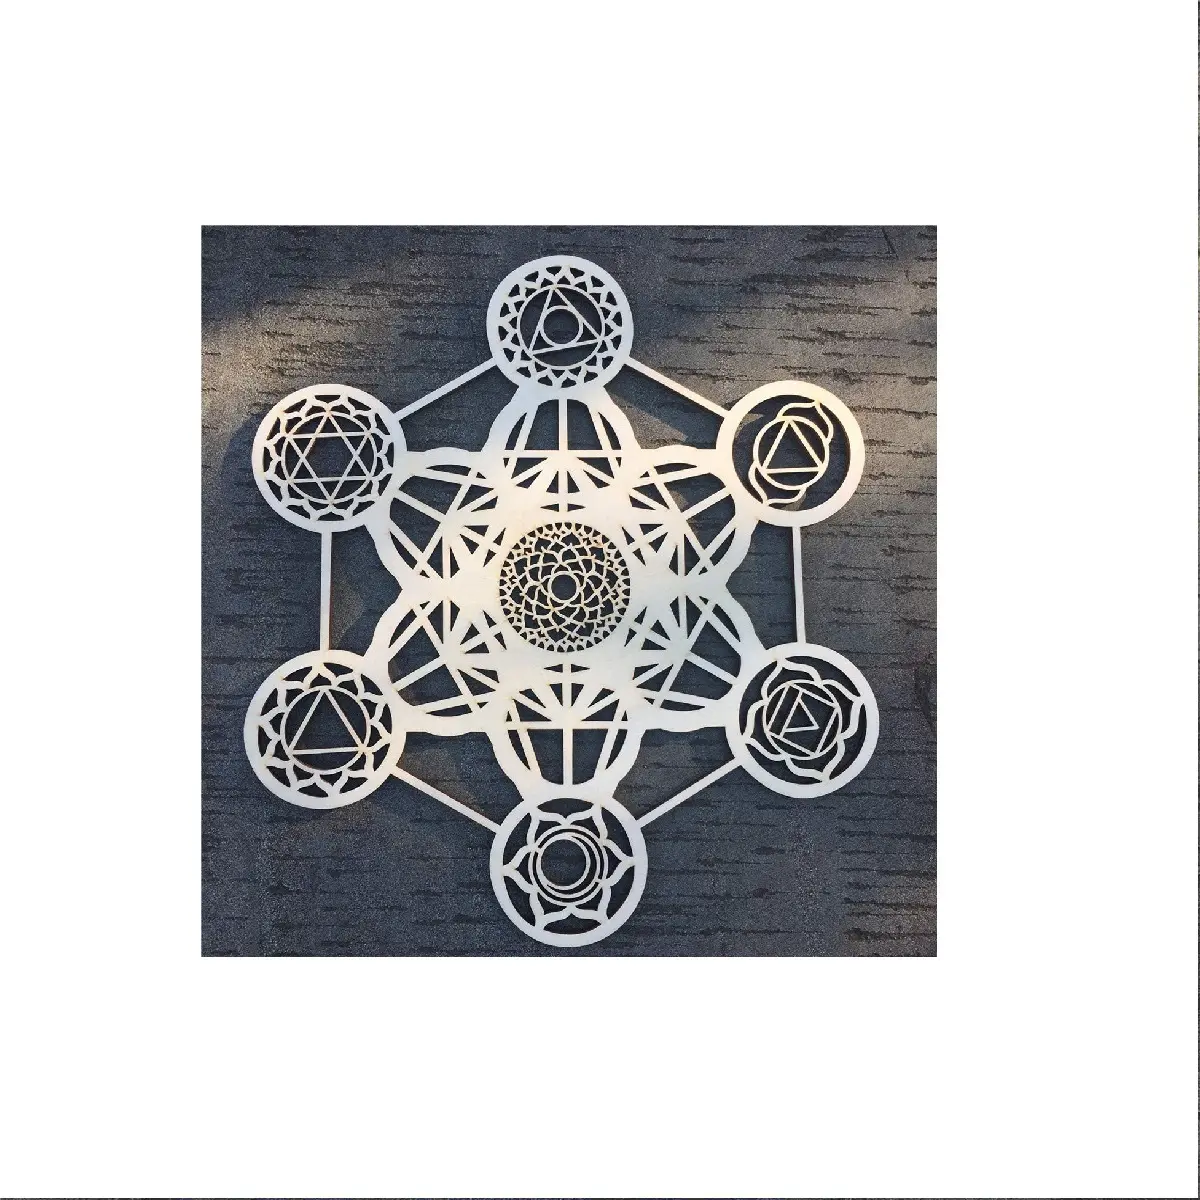 Ornamen Potongan Laser Papan Kayu Dekorasi Seni Dinding Tetrahedron Geometri Suci Kayu Dibuat dengan Harga Terbaik